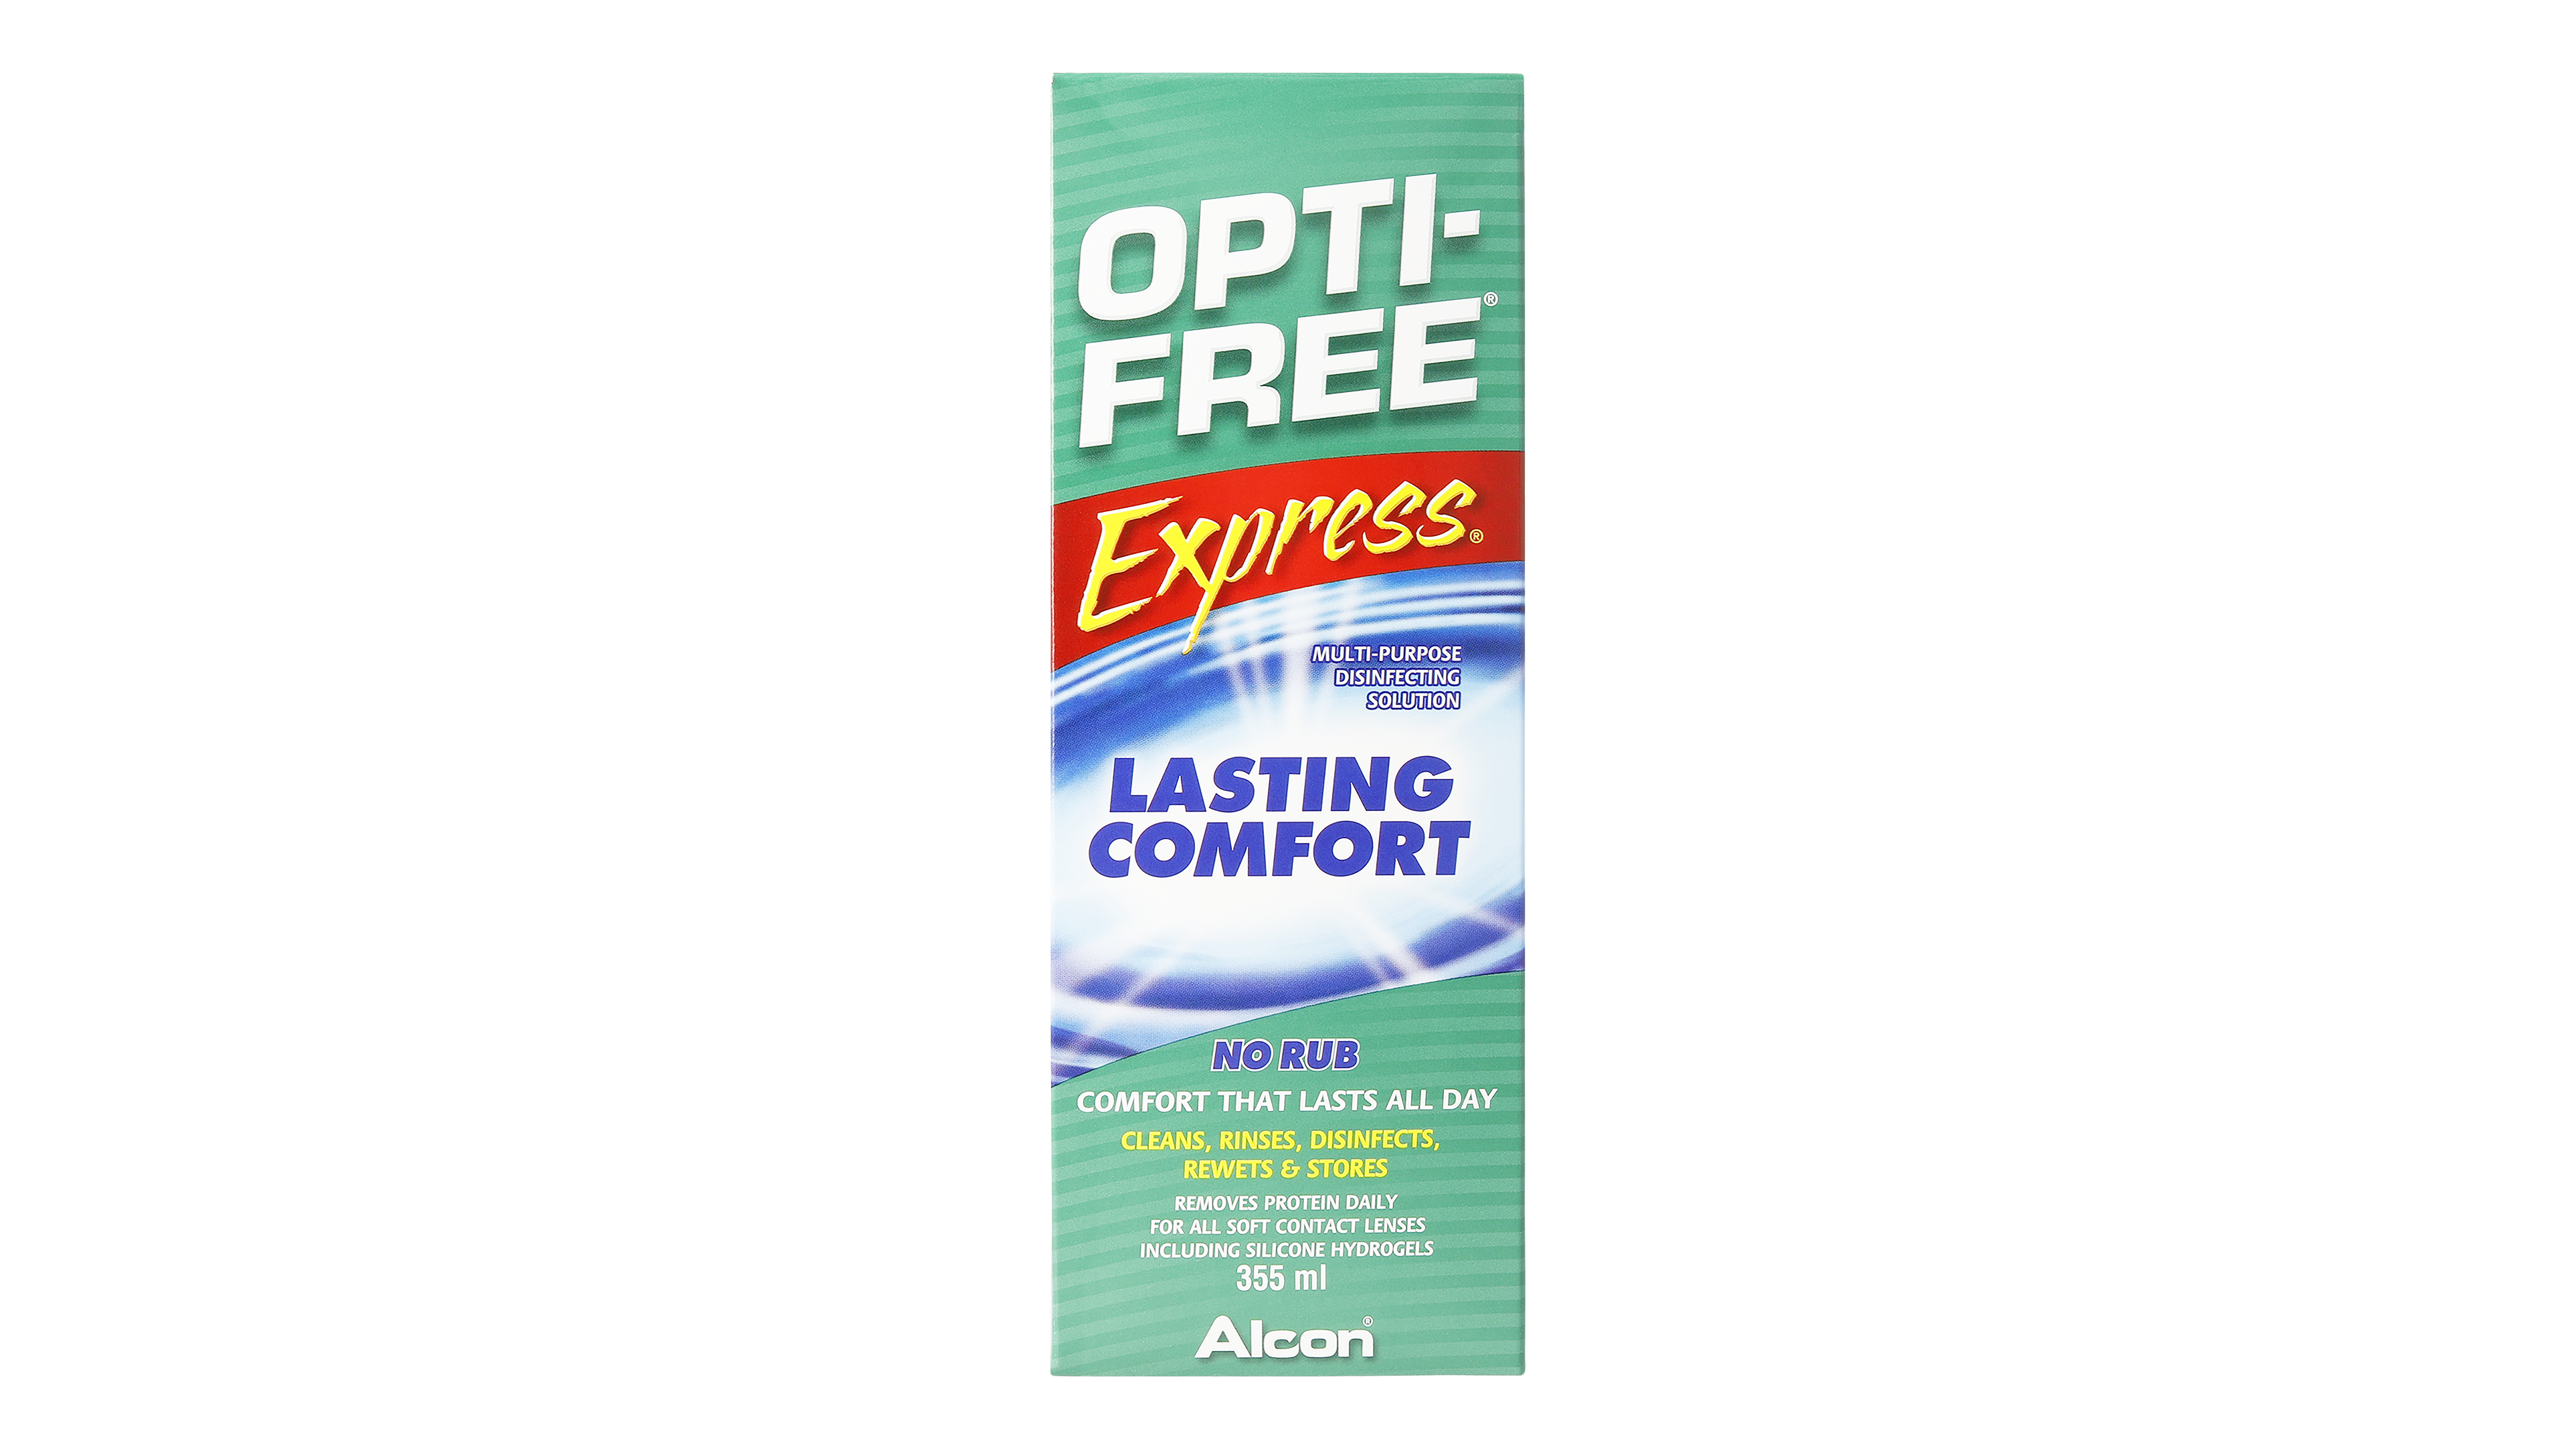 Front Opti-Free Opti-Free Express 355ml